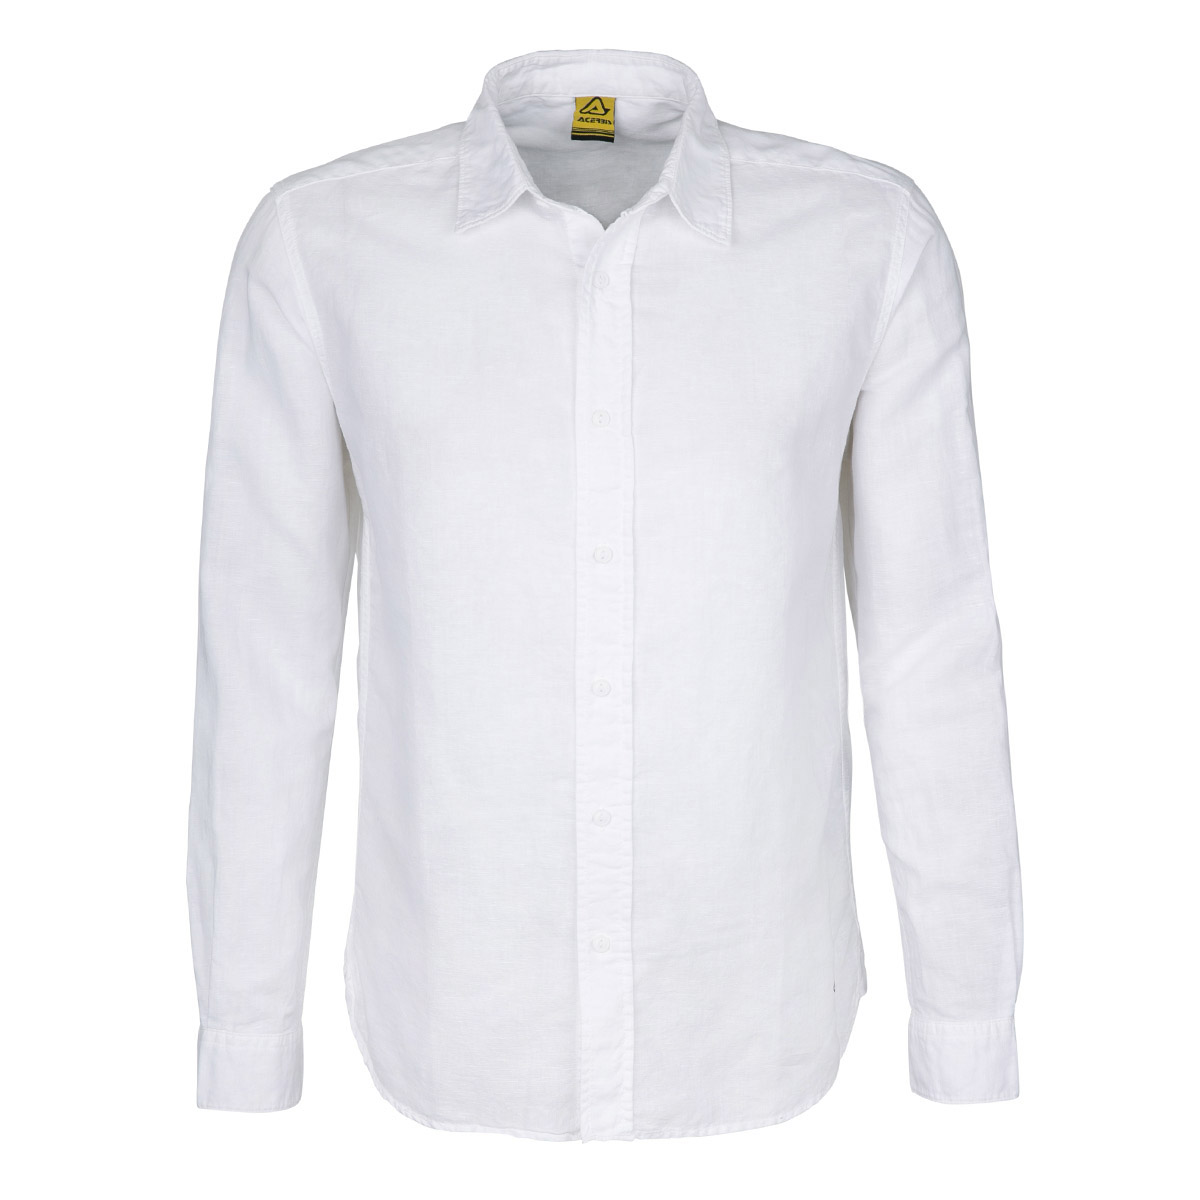 Acerbis Shirt Long Sleeve SP Club White